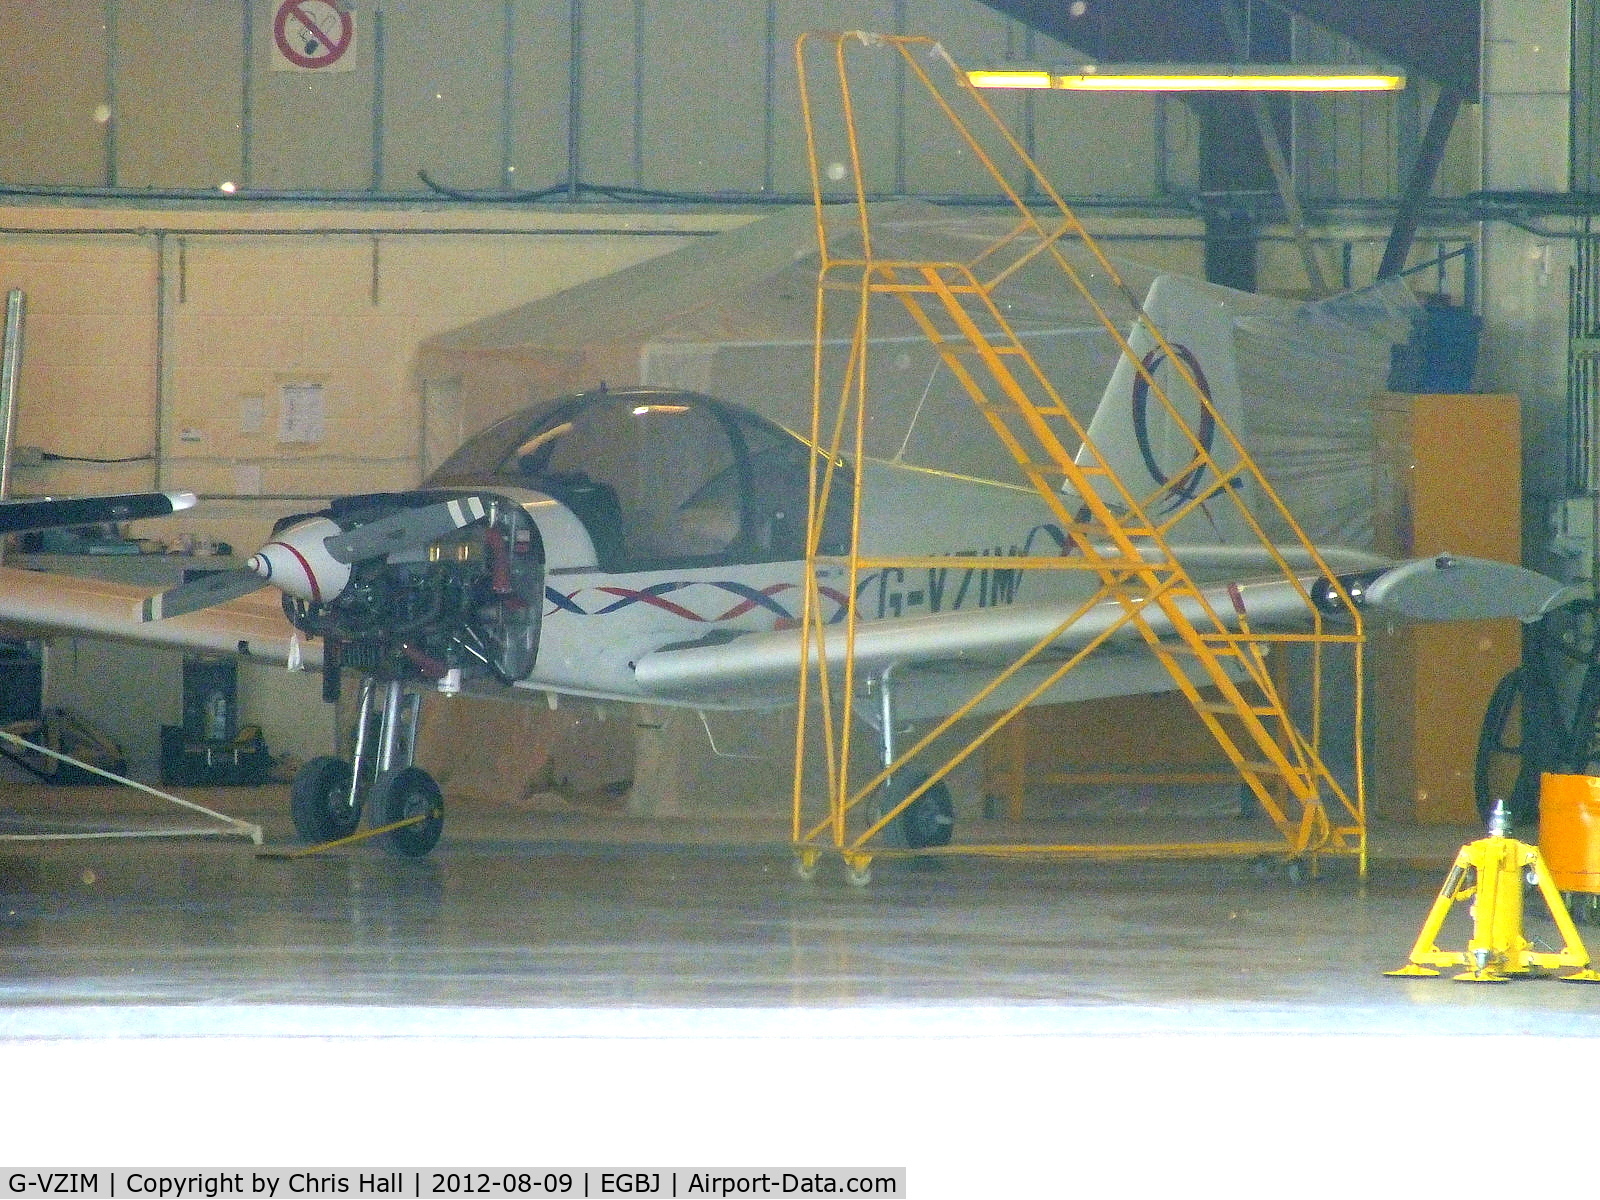 G-VZIM, 2007 Alpha R2160 C/N 160A-07012, at the rear of one of the maintenance hangars